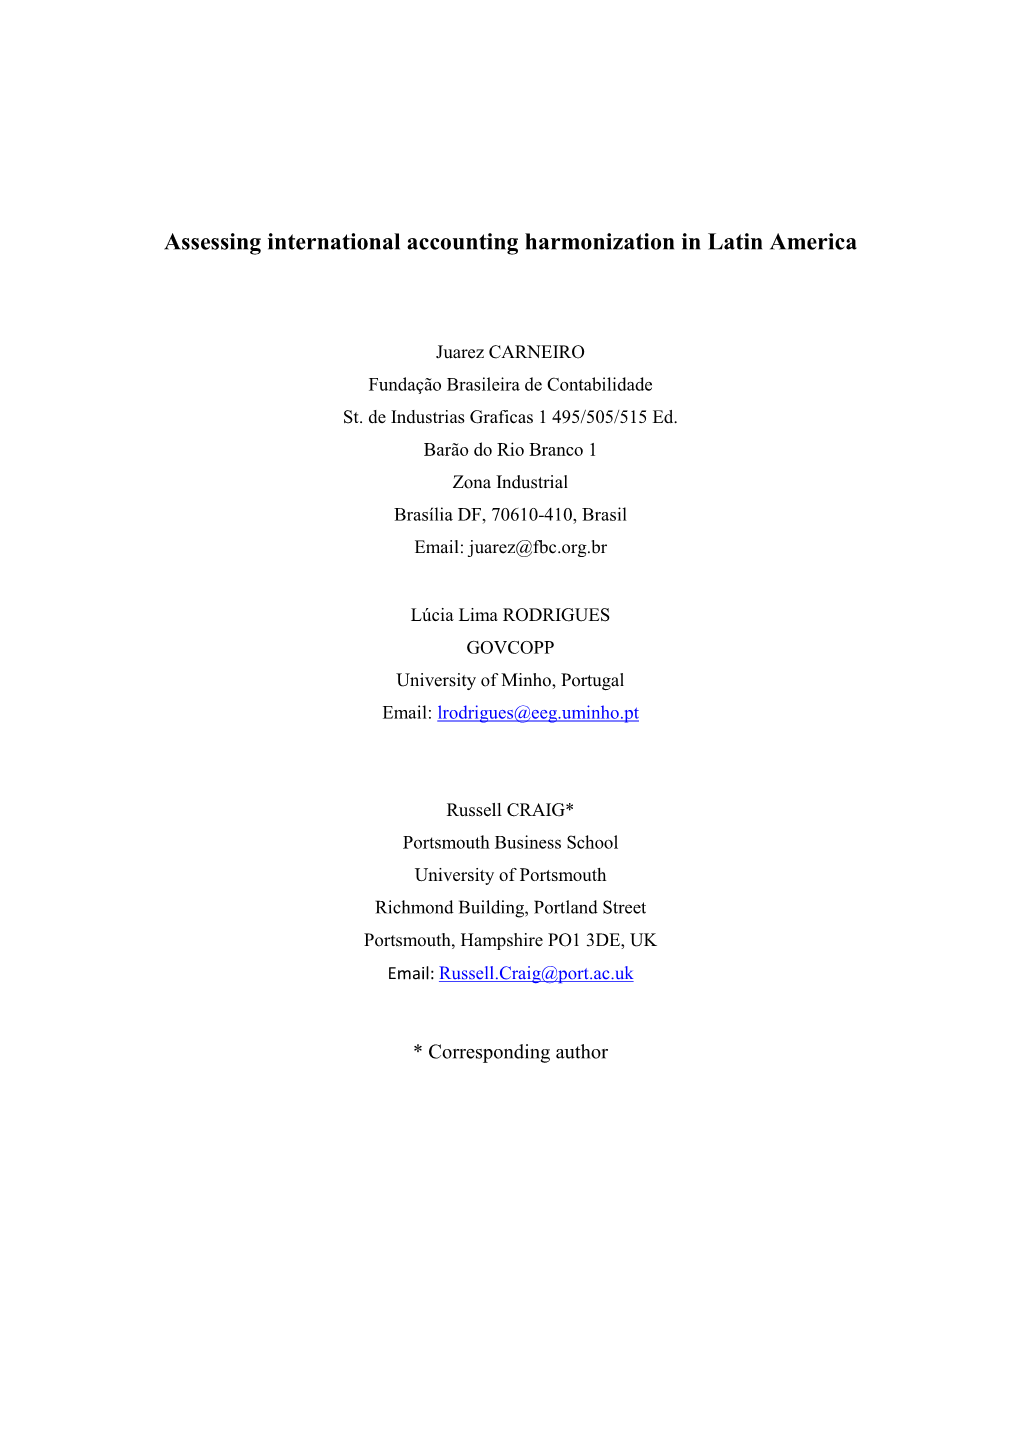 Assessing International Accounting Harmonization in Latin America